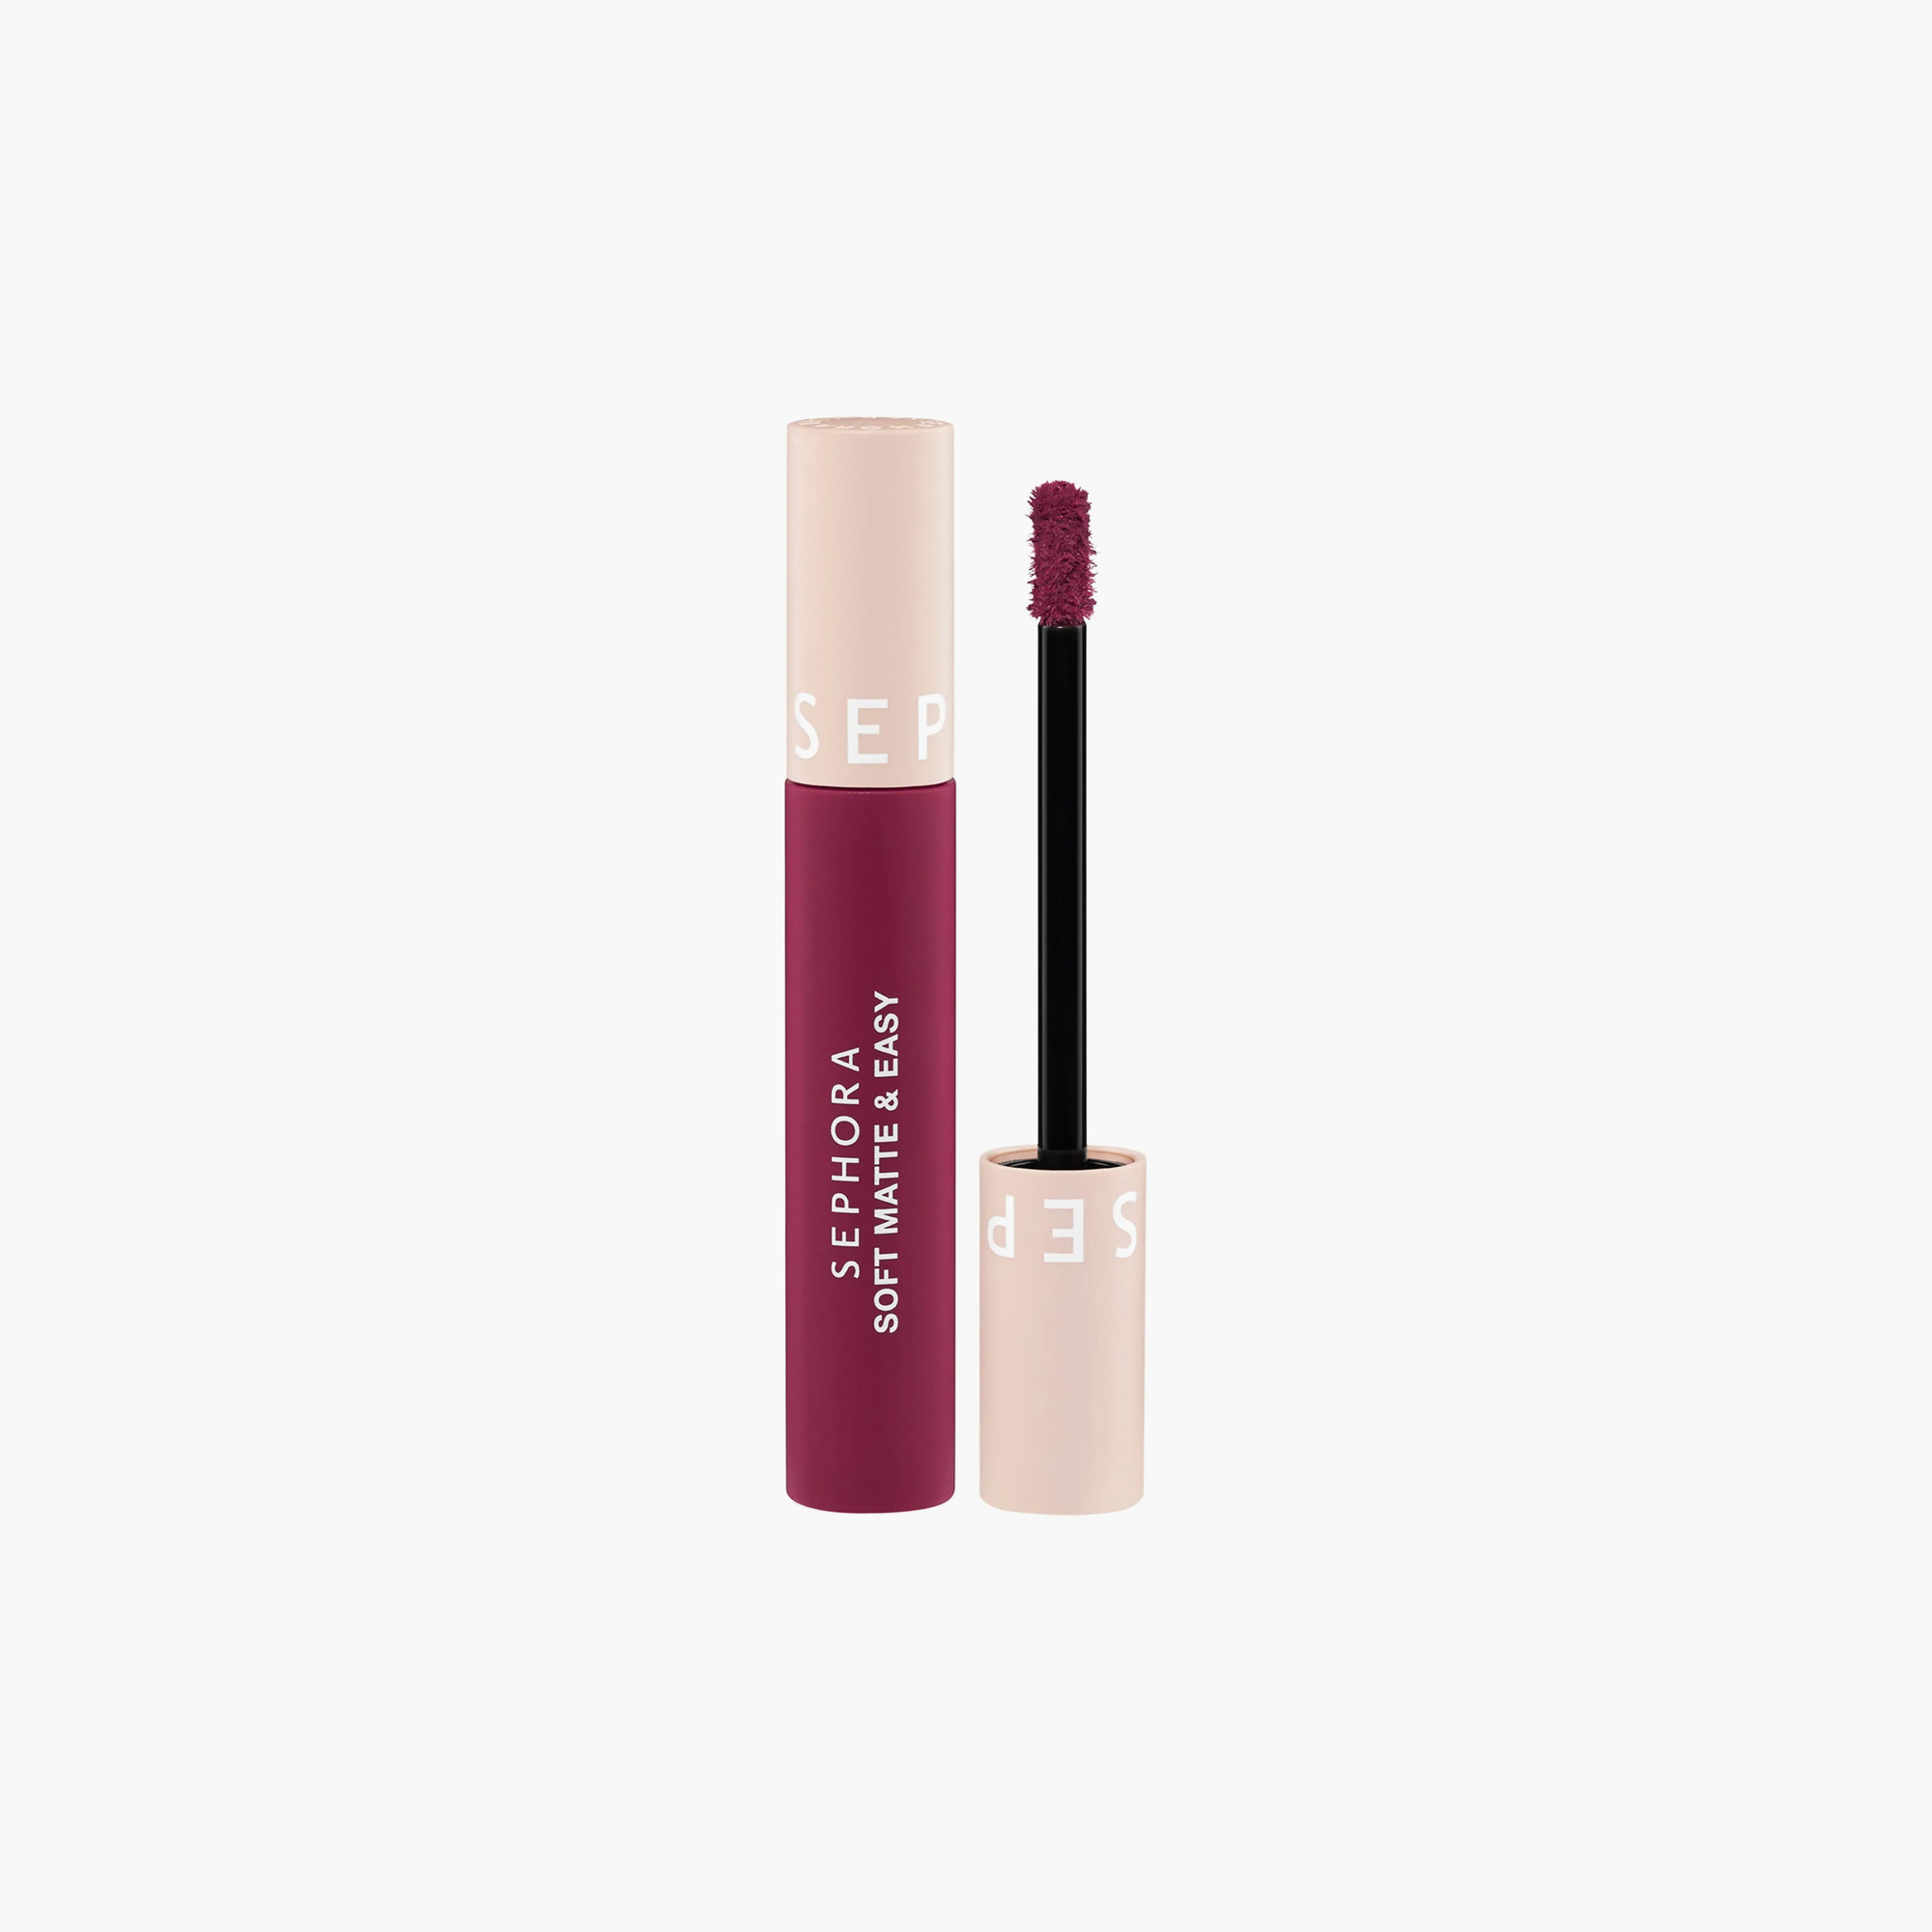 New Sephora Collection Soft Matte & Easy Liquid Lipsticks. 